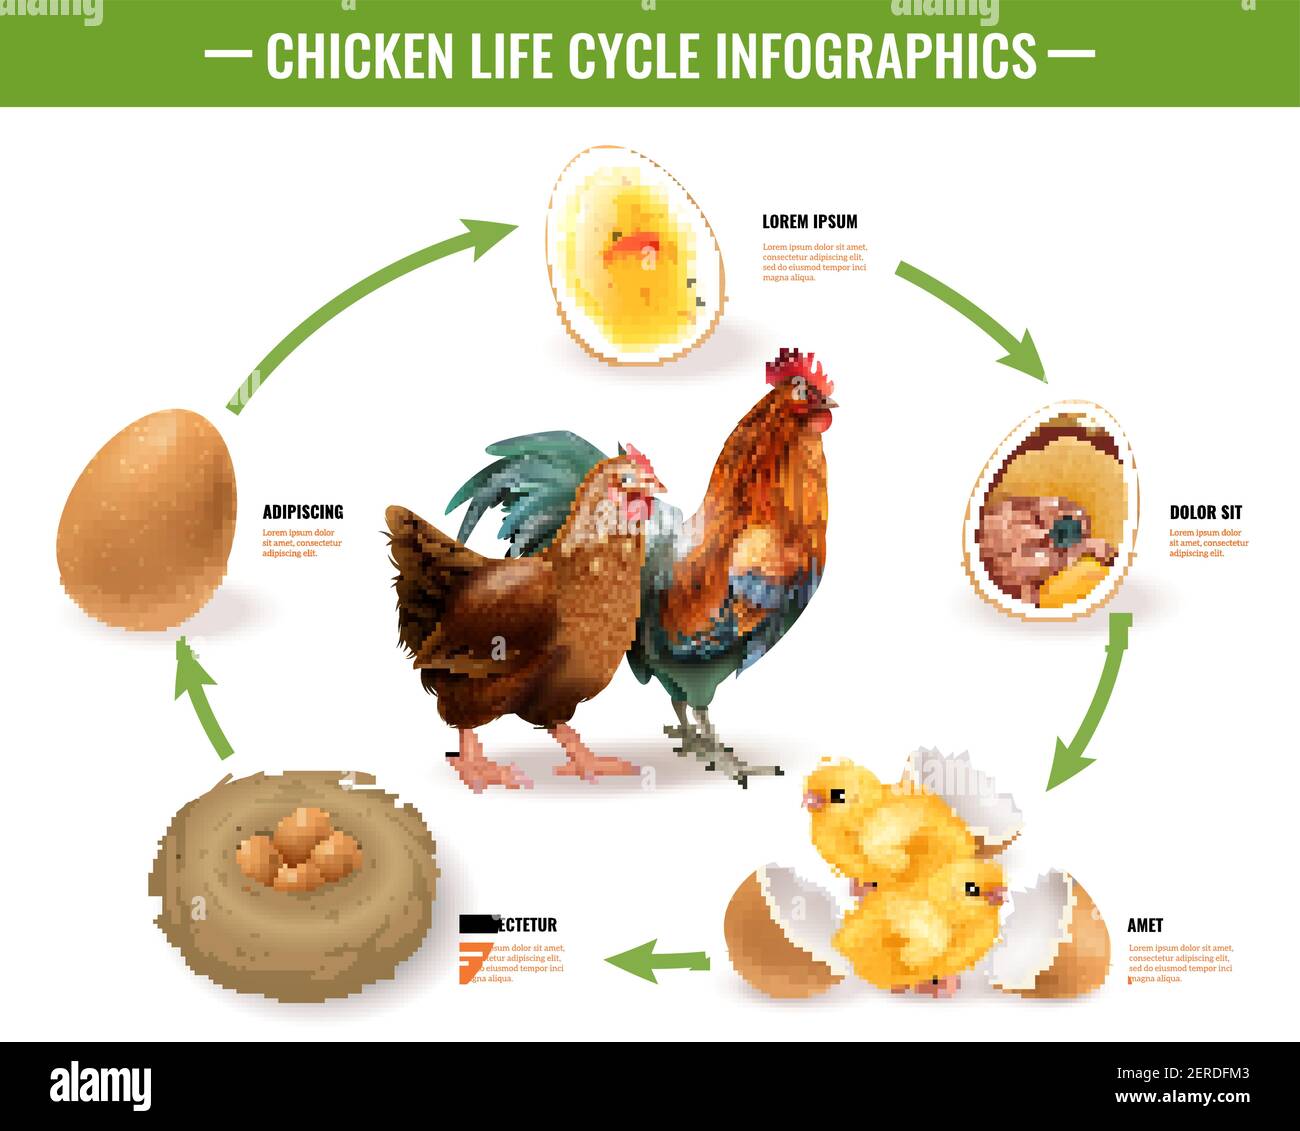 Señor molestarse Desarmado Ciclo de vida de pollo etapas composición infográfica realista a partir de huevos  fértiles desarrollo de embriones para incubar polluelos vector ilustración  Imagen Vector de stock - Alamy